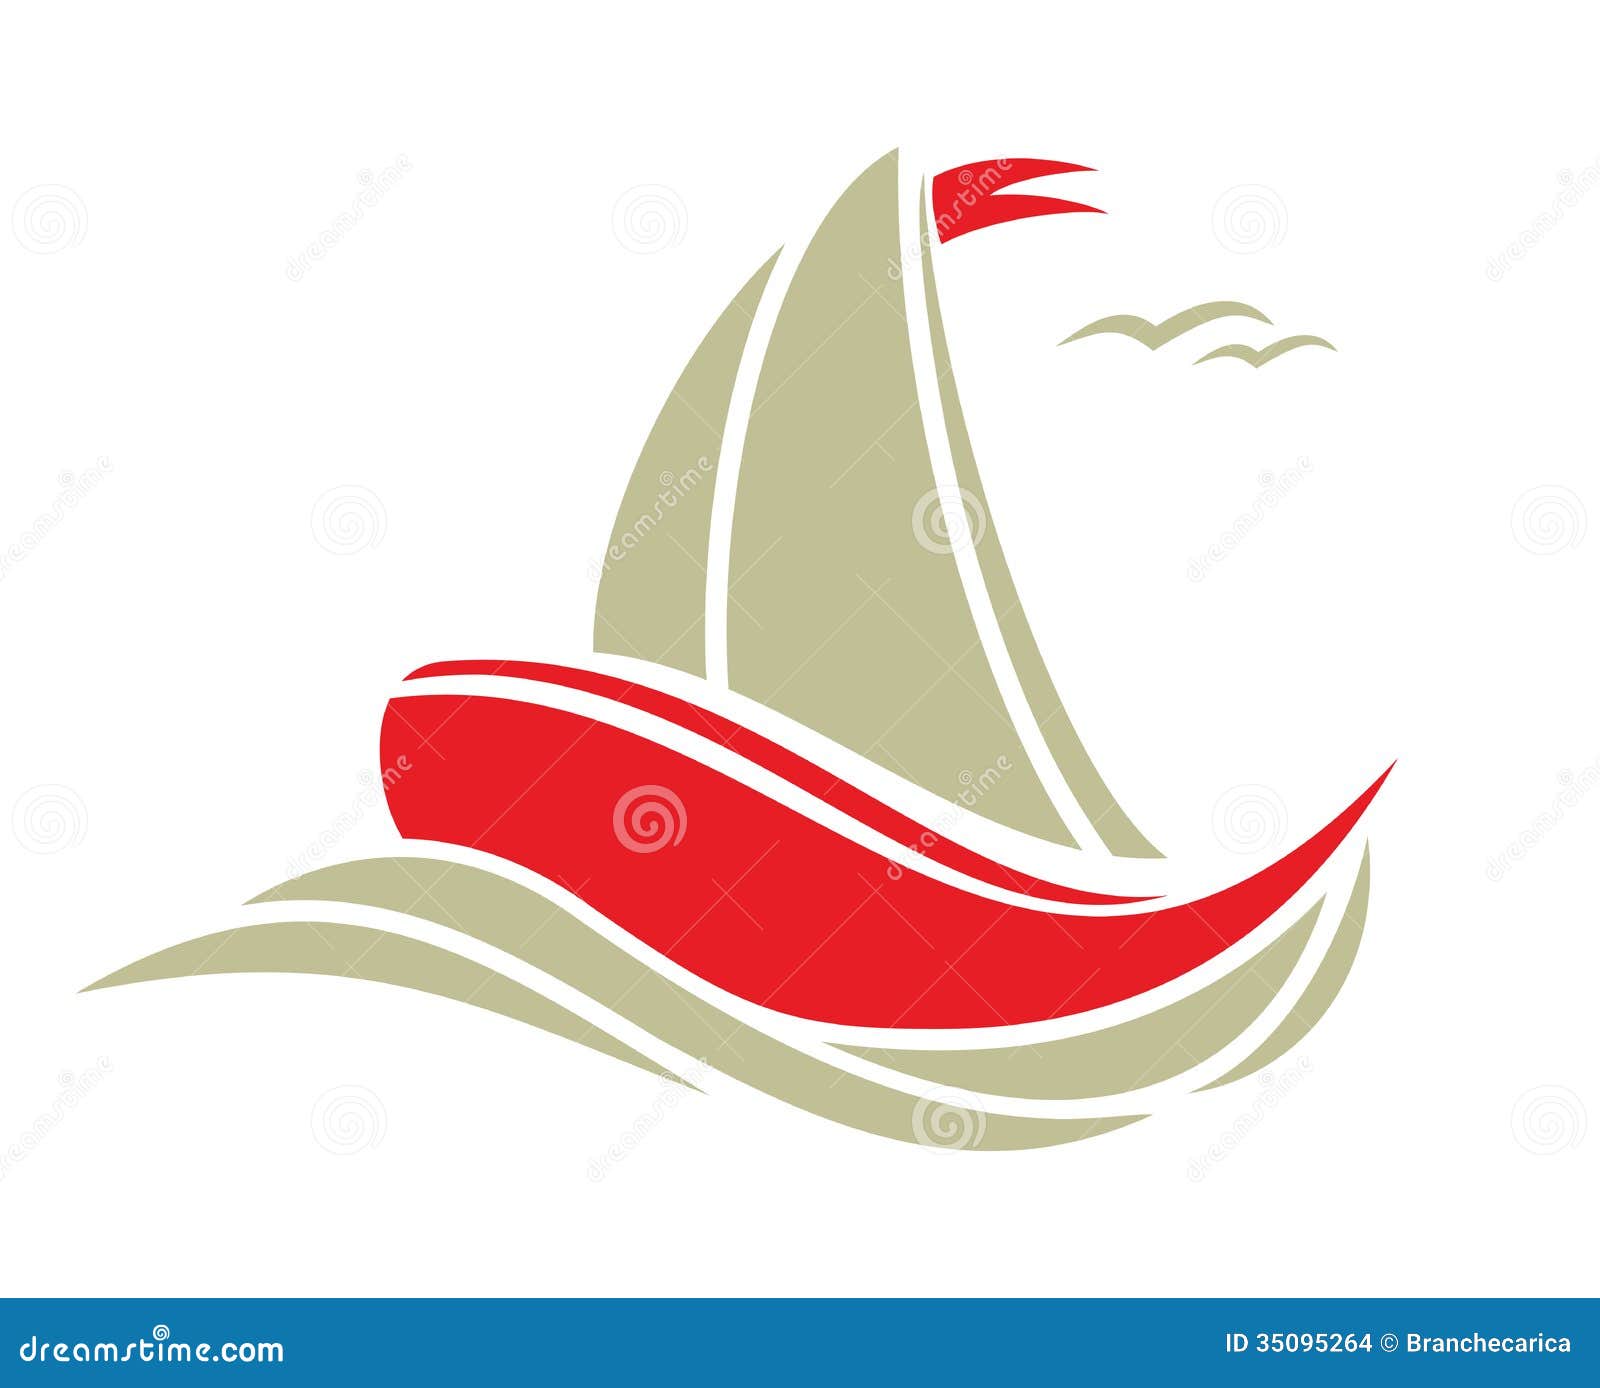 Sailing Boat Stock Images - Image: 35095264